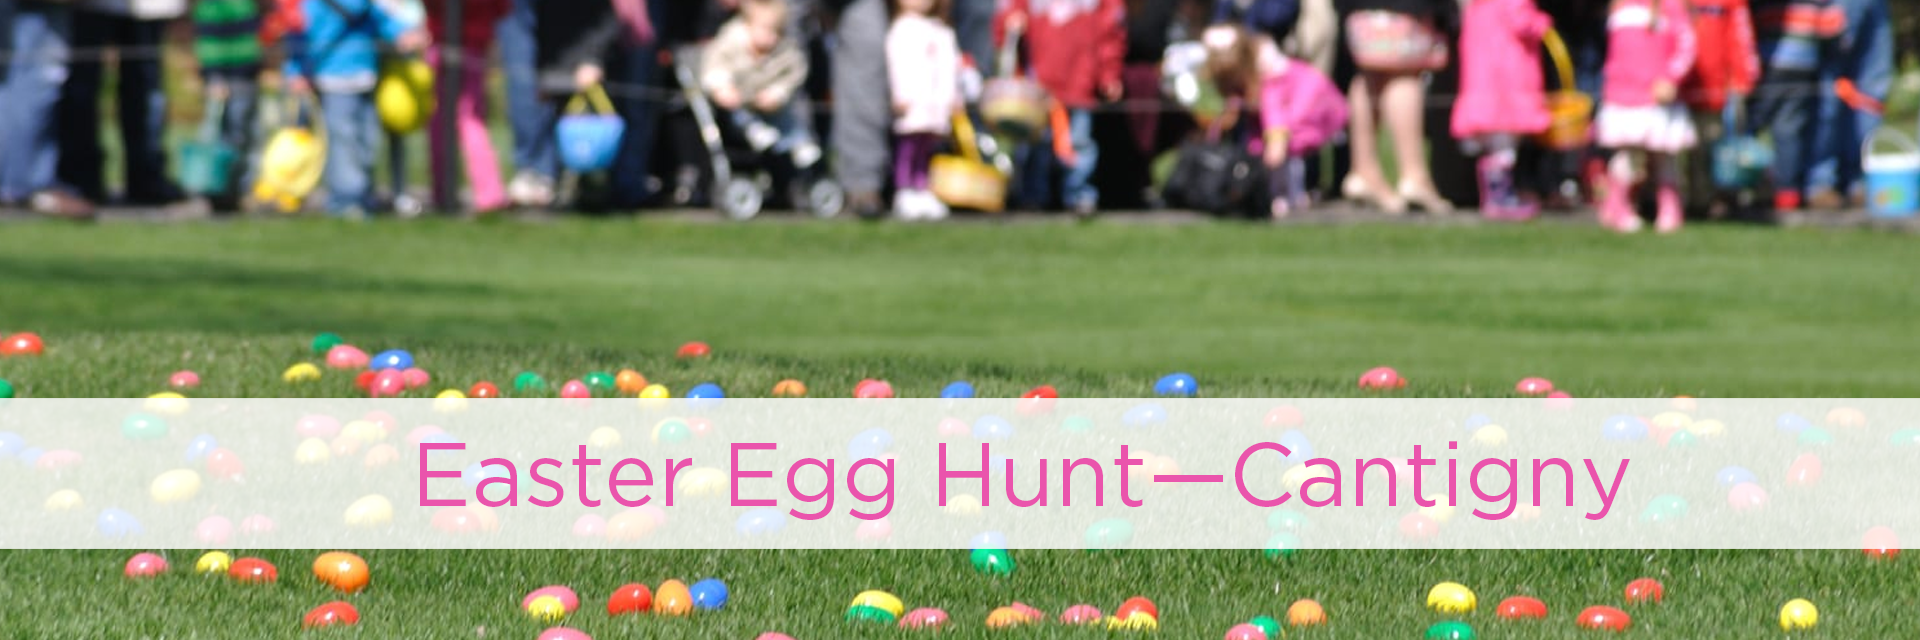 Cantigy Park-Easter Egg Hunt